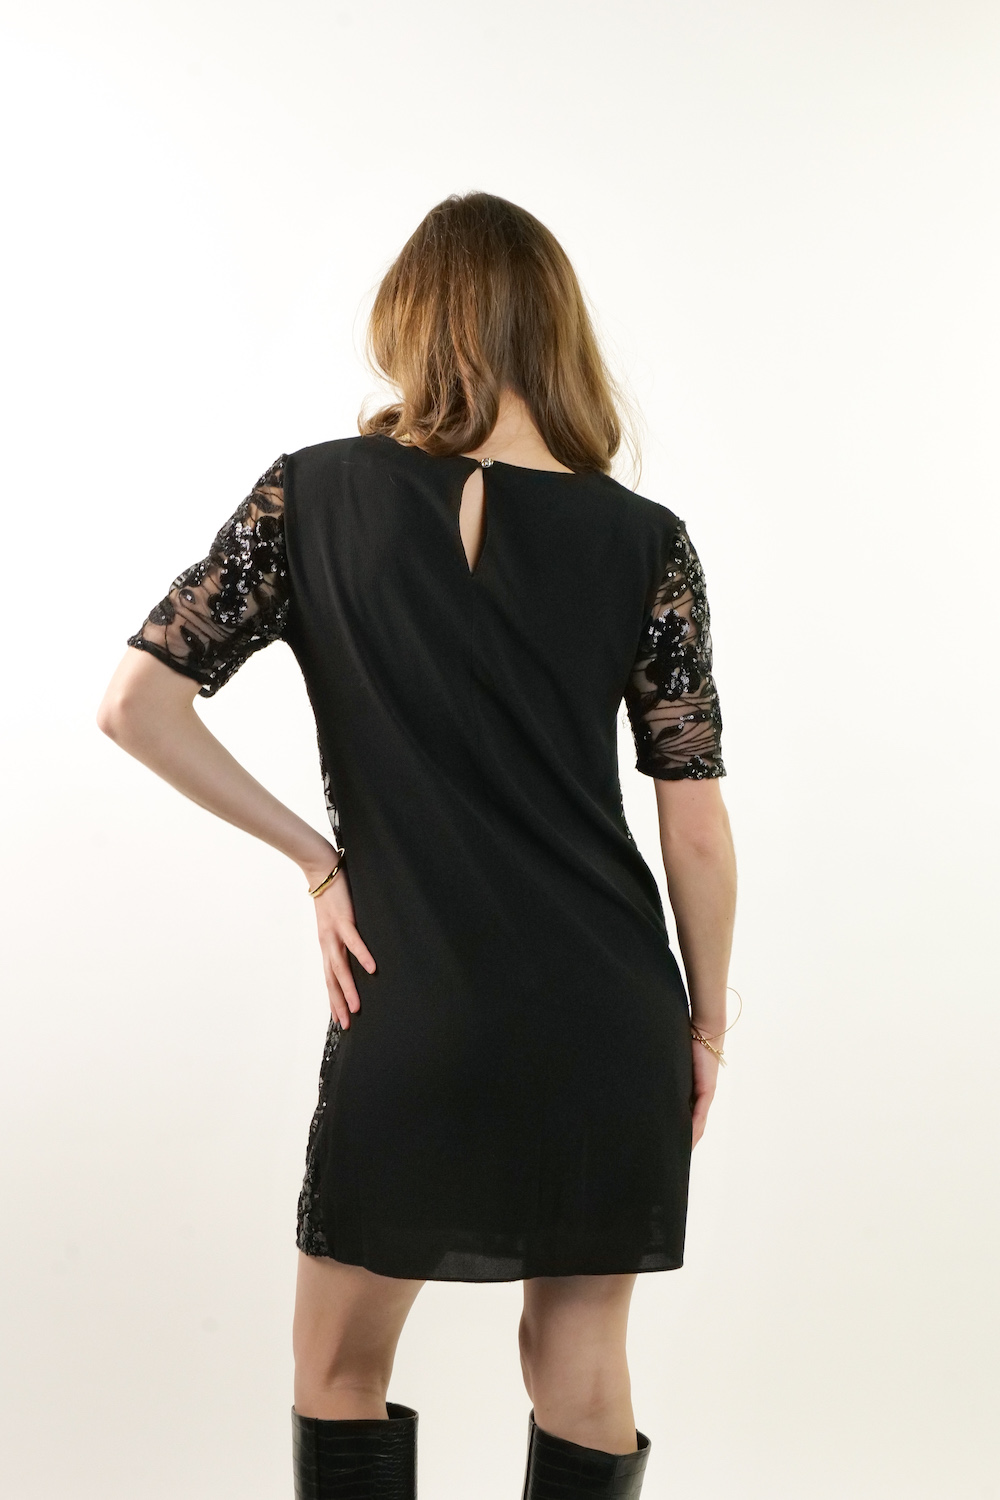 Коротка чорна сукня з пайетками італійського бренду Imperial